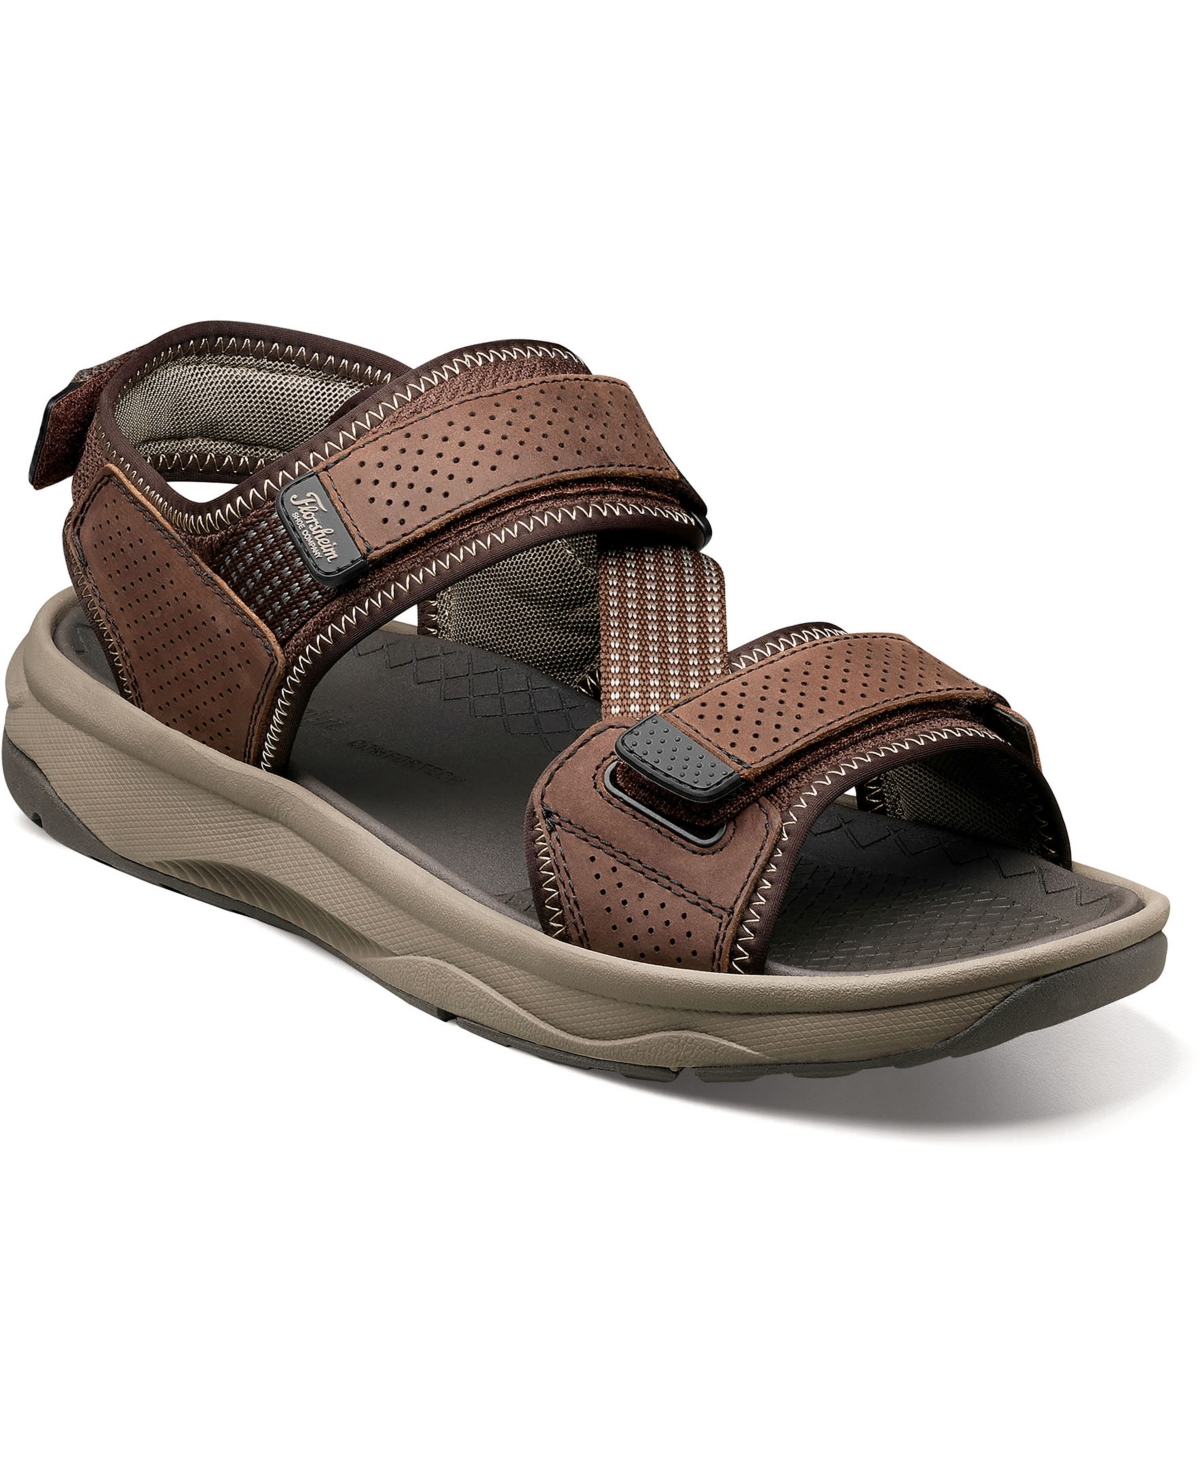 Men's Tread Lite River Sandal - Brown